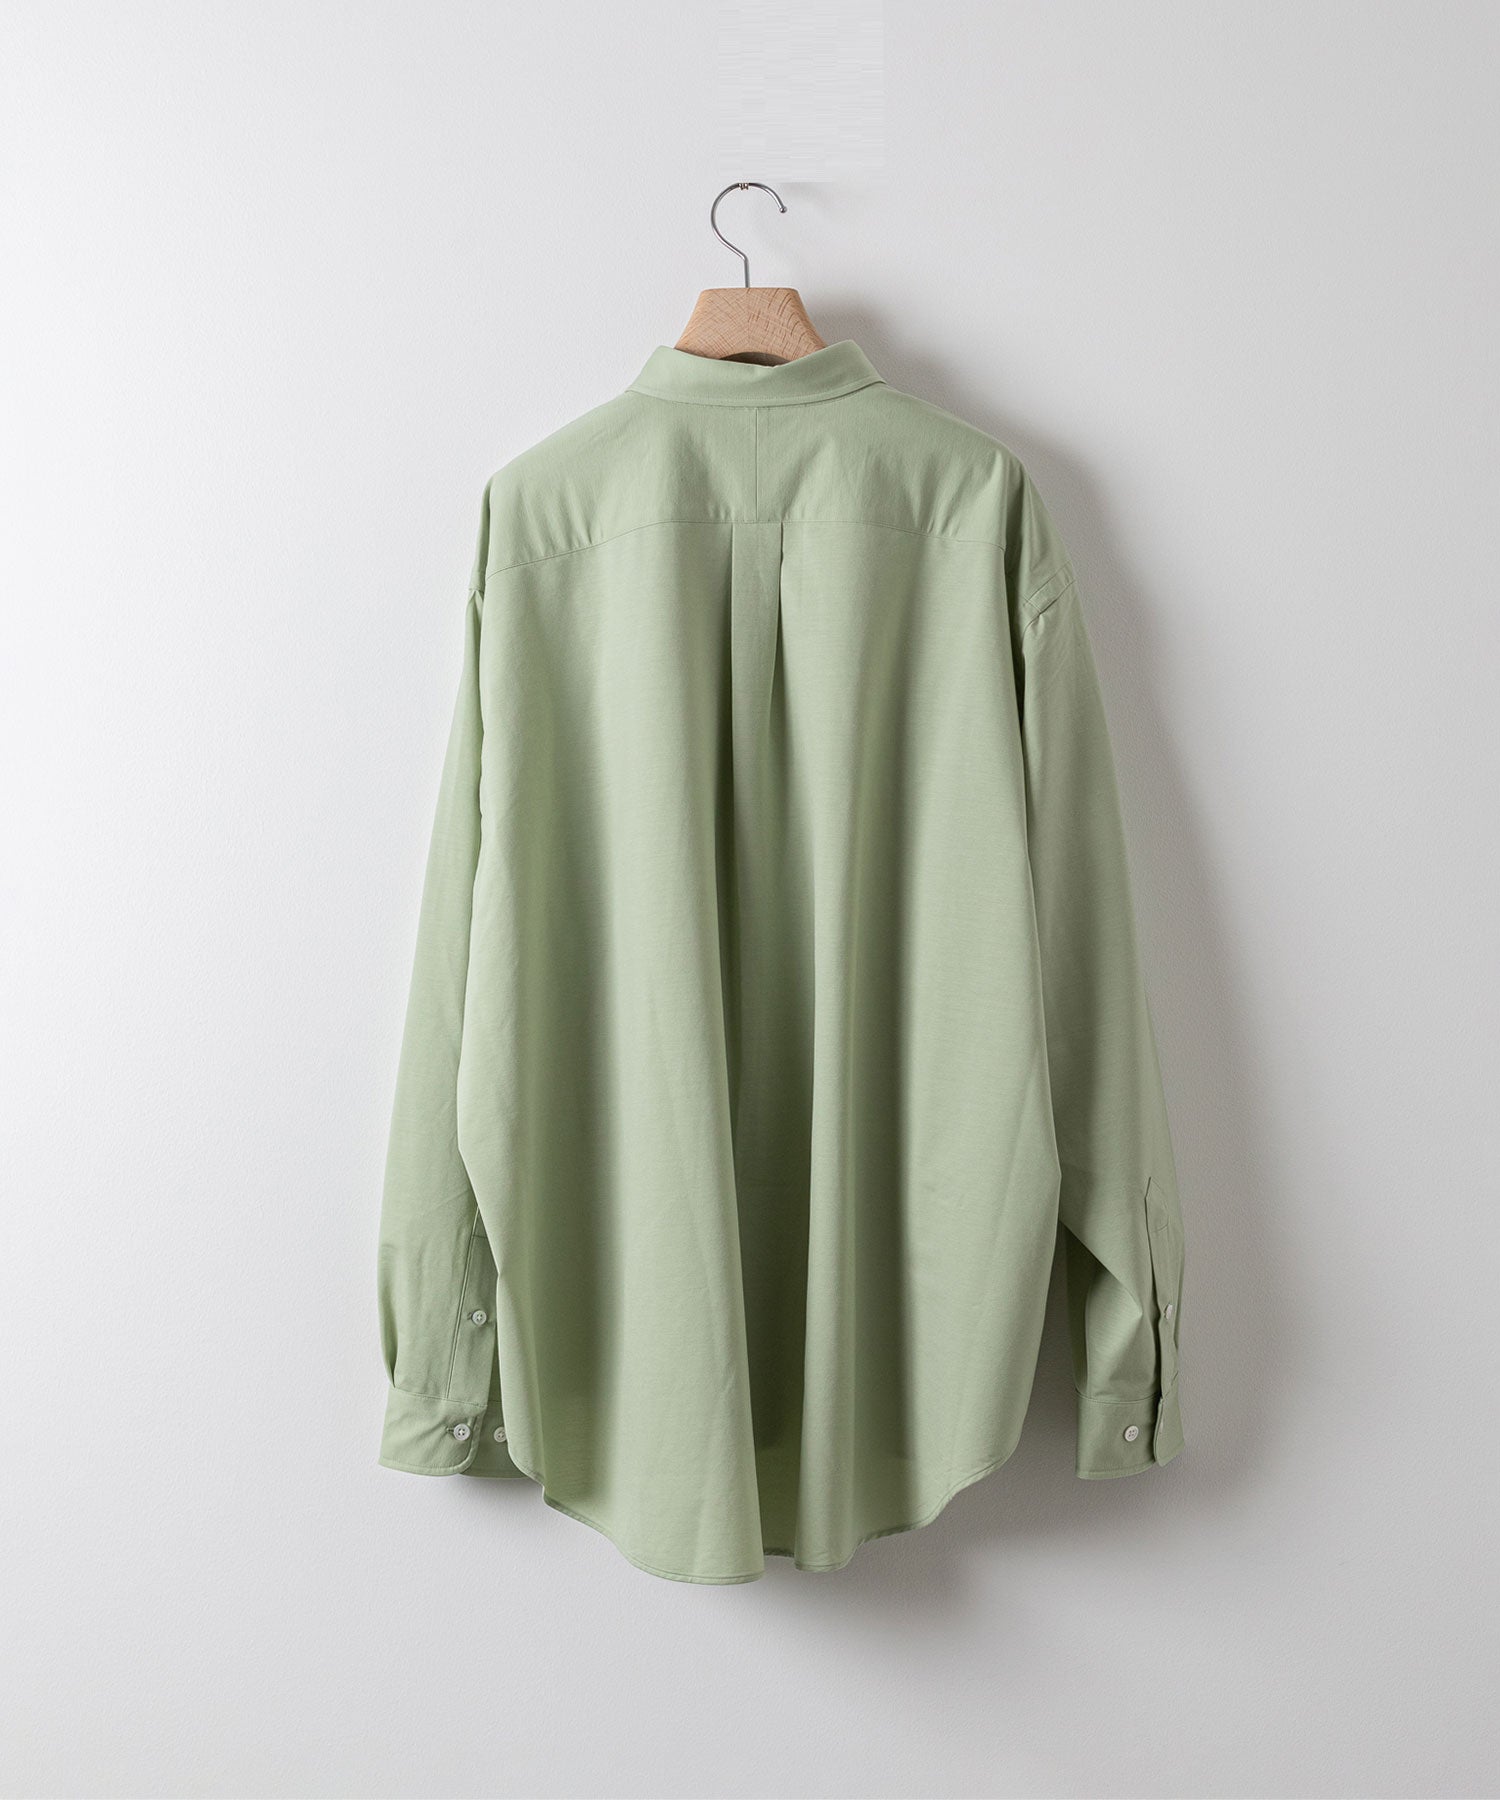 【KANEMASA PHIL.】カネマサのROYAL OX DRESS JERSEY SHIRT - LIGHT GREEN